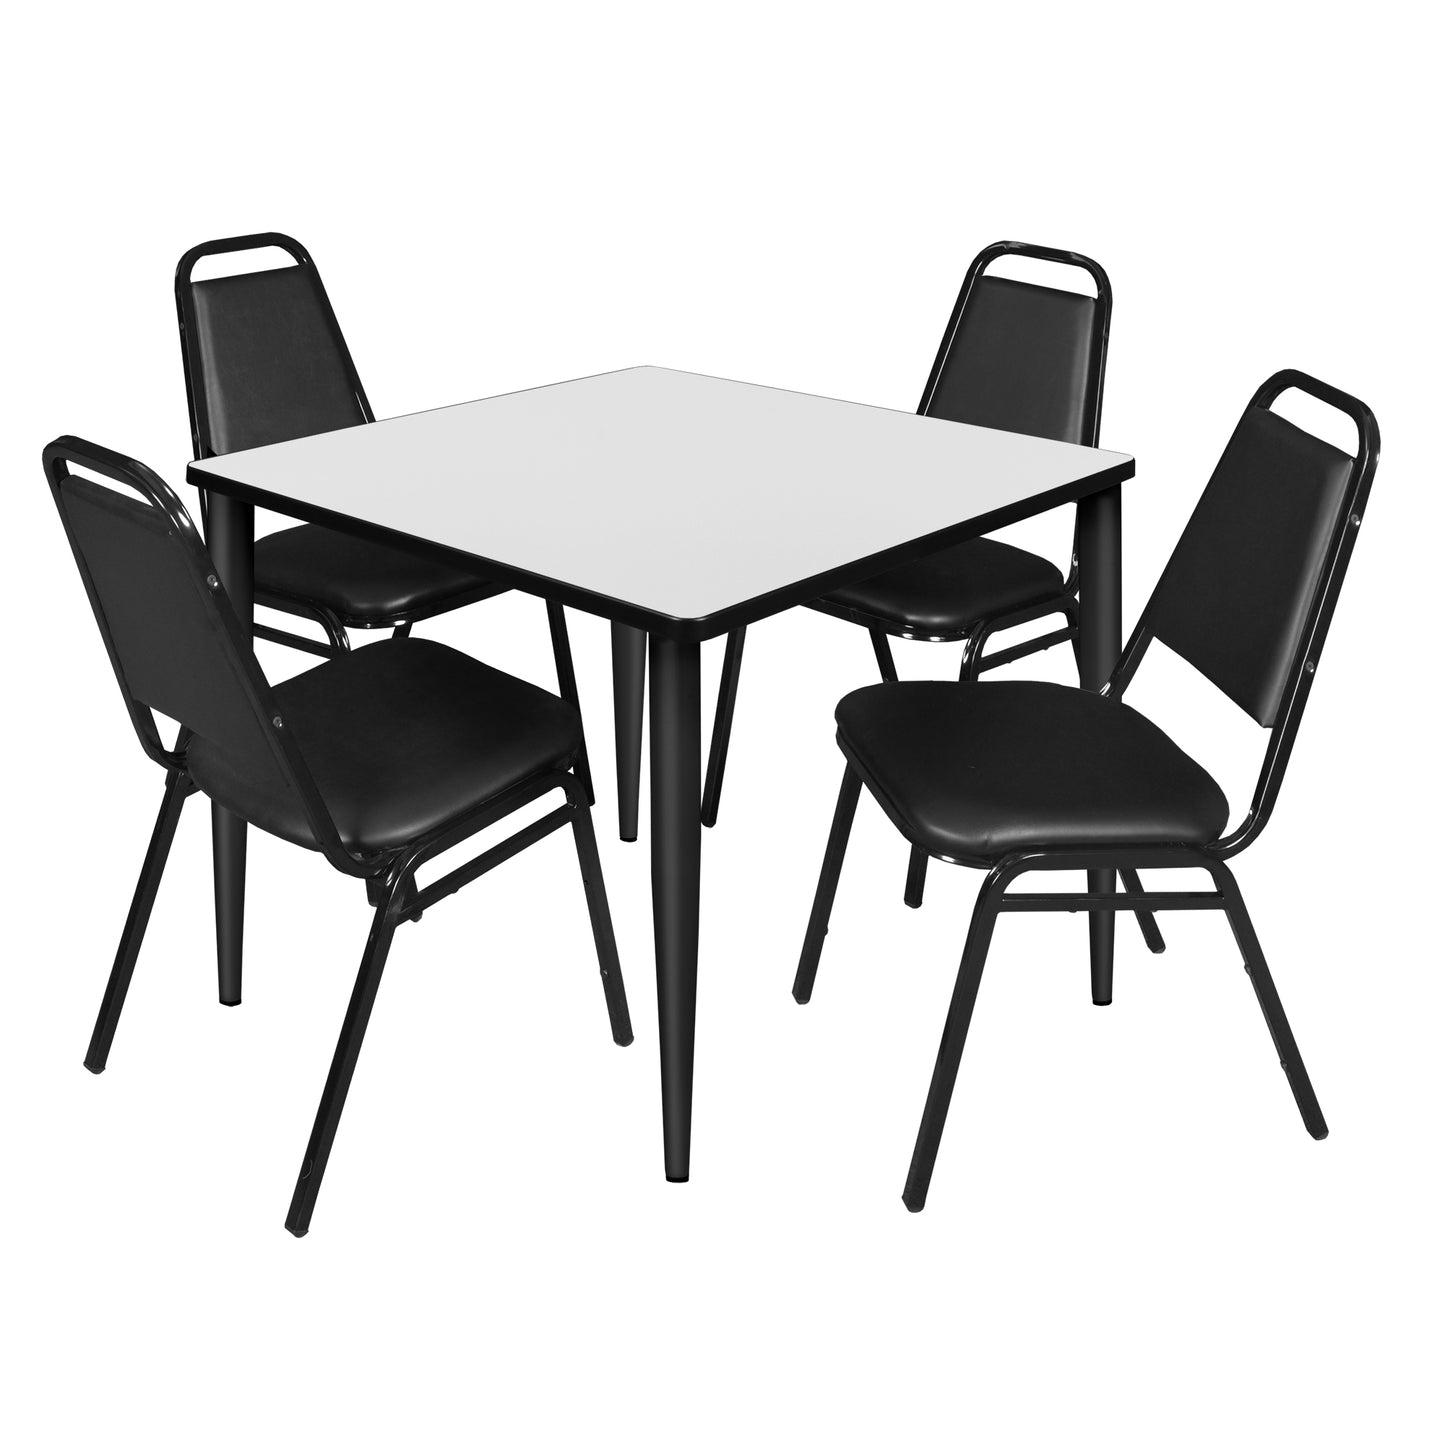 Regency Kahlo 42 in. Square Breakroom Table & 4 Restaurant Stack Chairs - Black